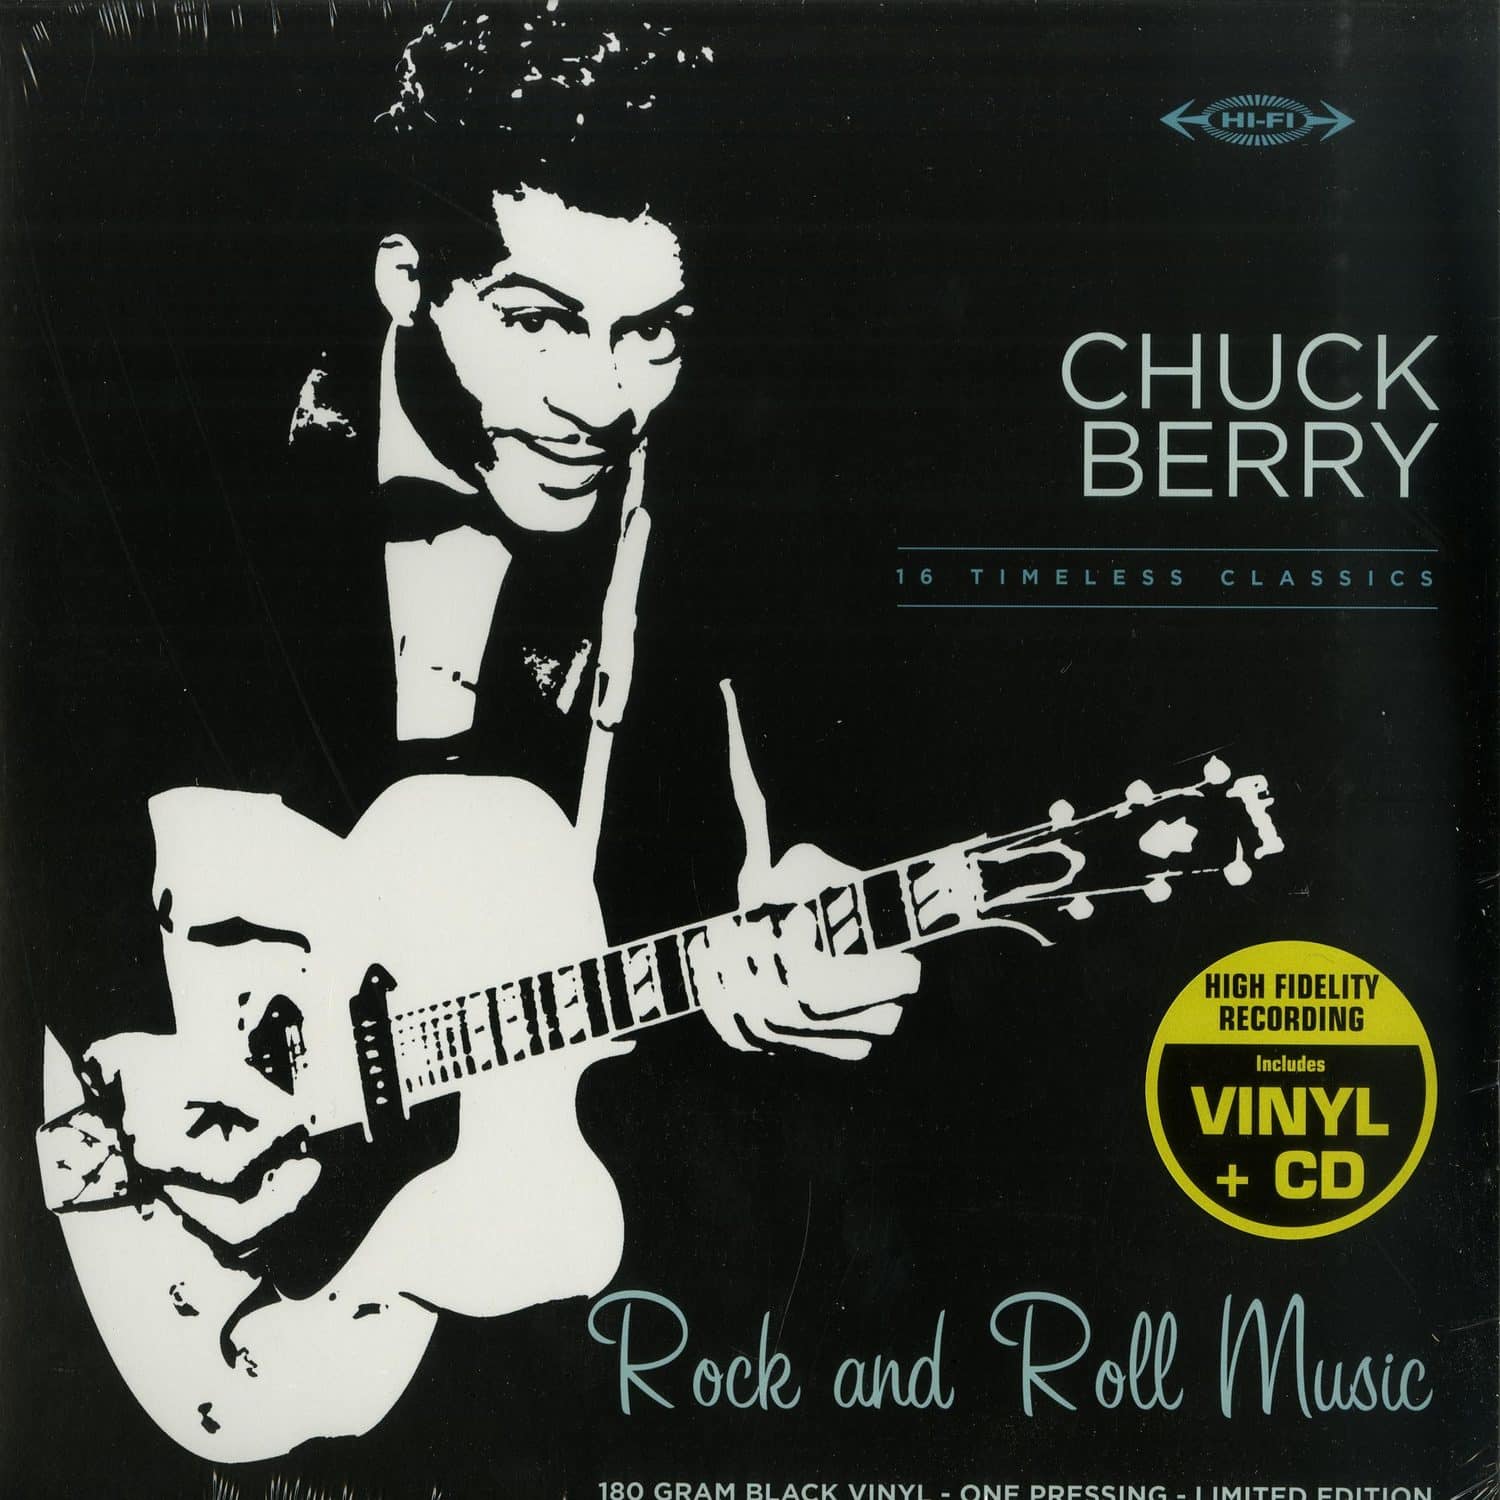 Chuck Berry - 16 TIMELESS CLASSICS 